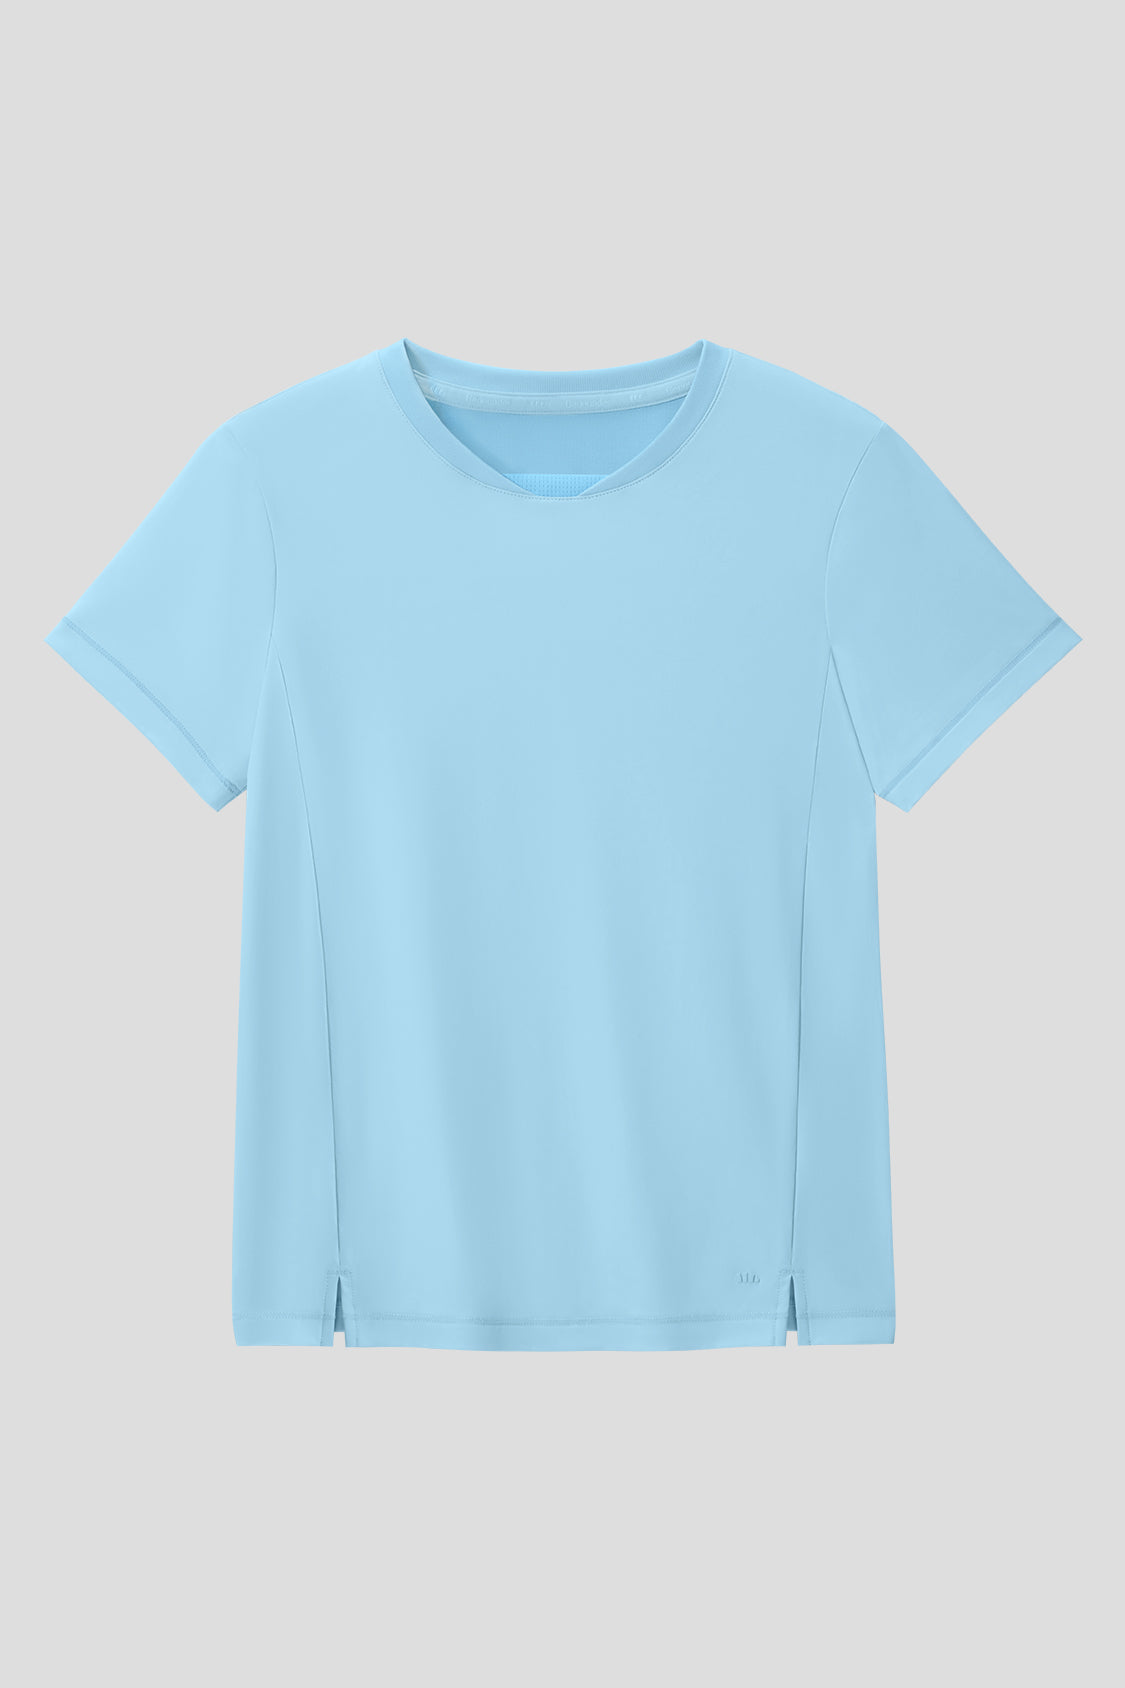 beneunder kids outdoor sun protection shirt upf50 #color_sky lake blue